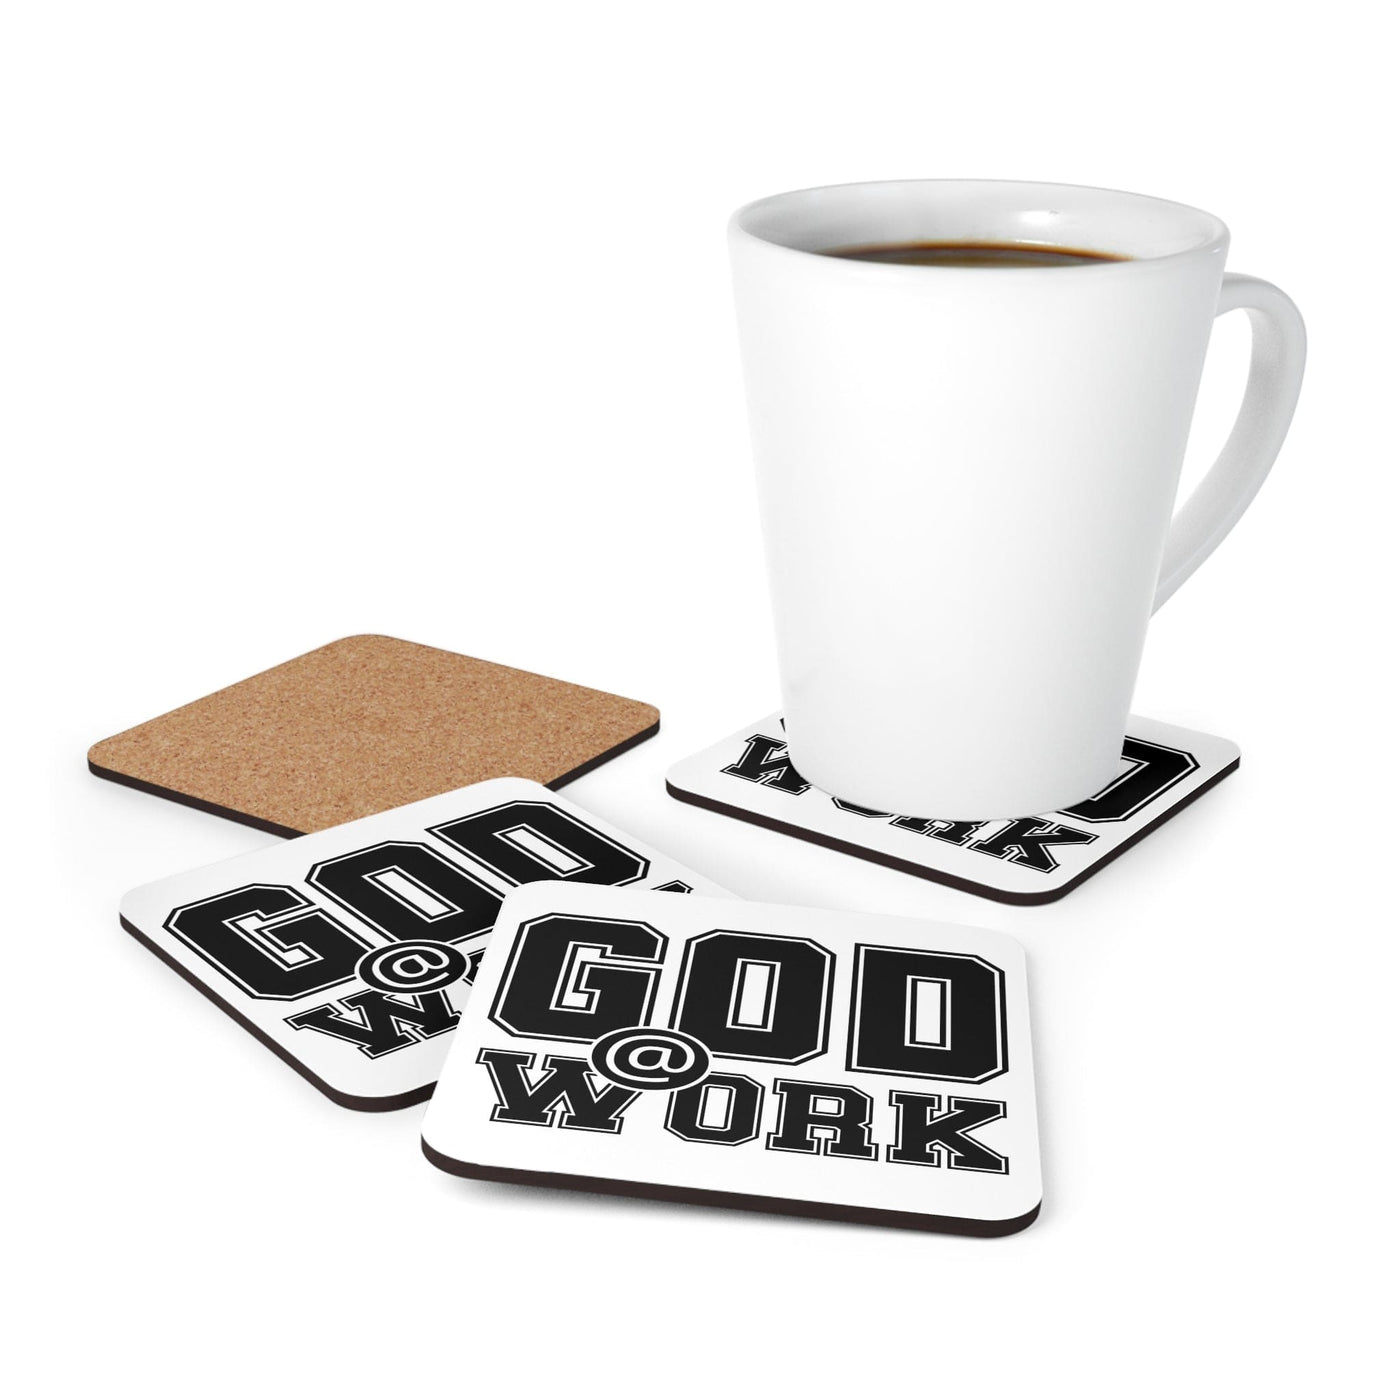 Coaster Set Of 4 For Drinks God @ Work Print - Decorative | Coasters